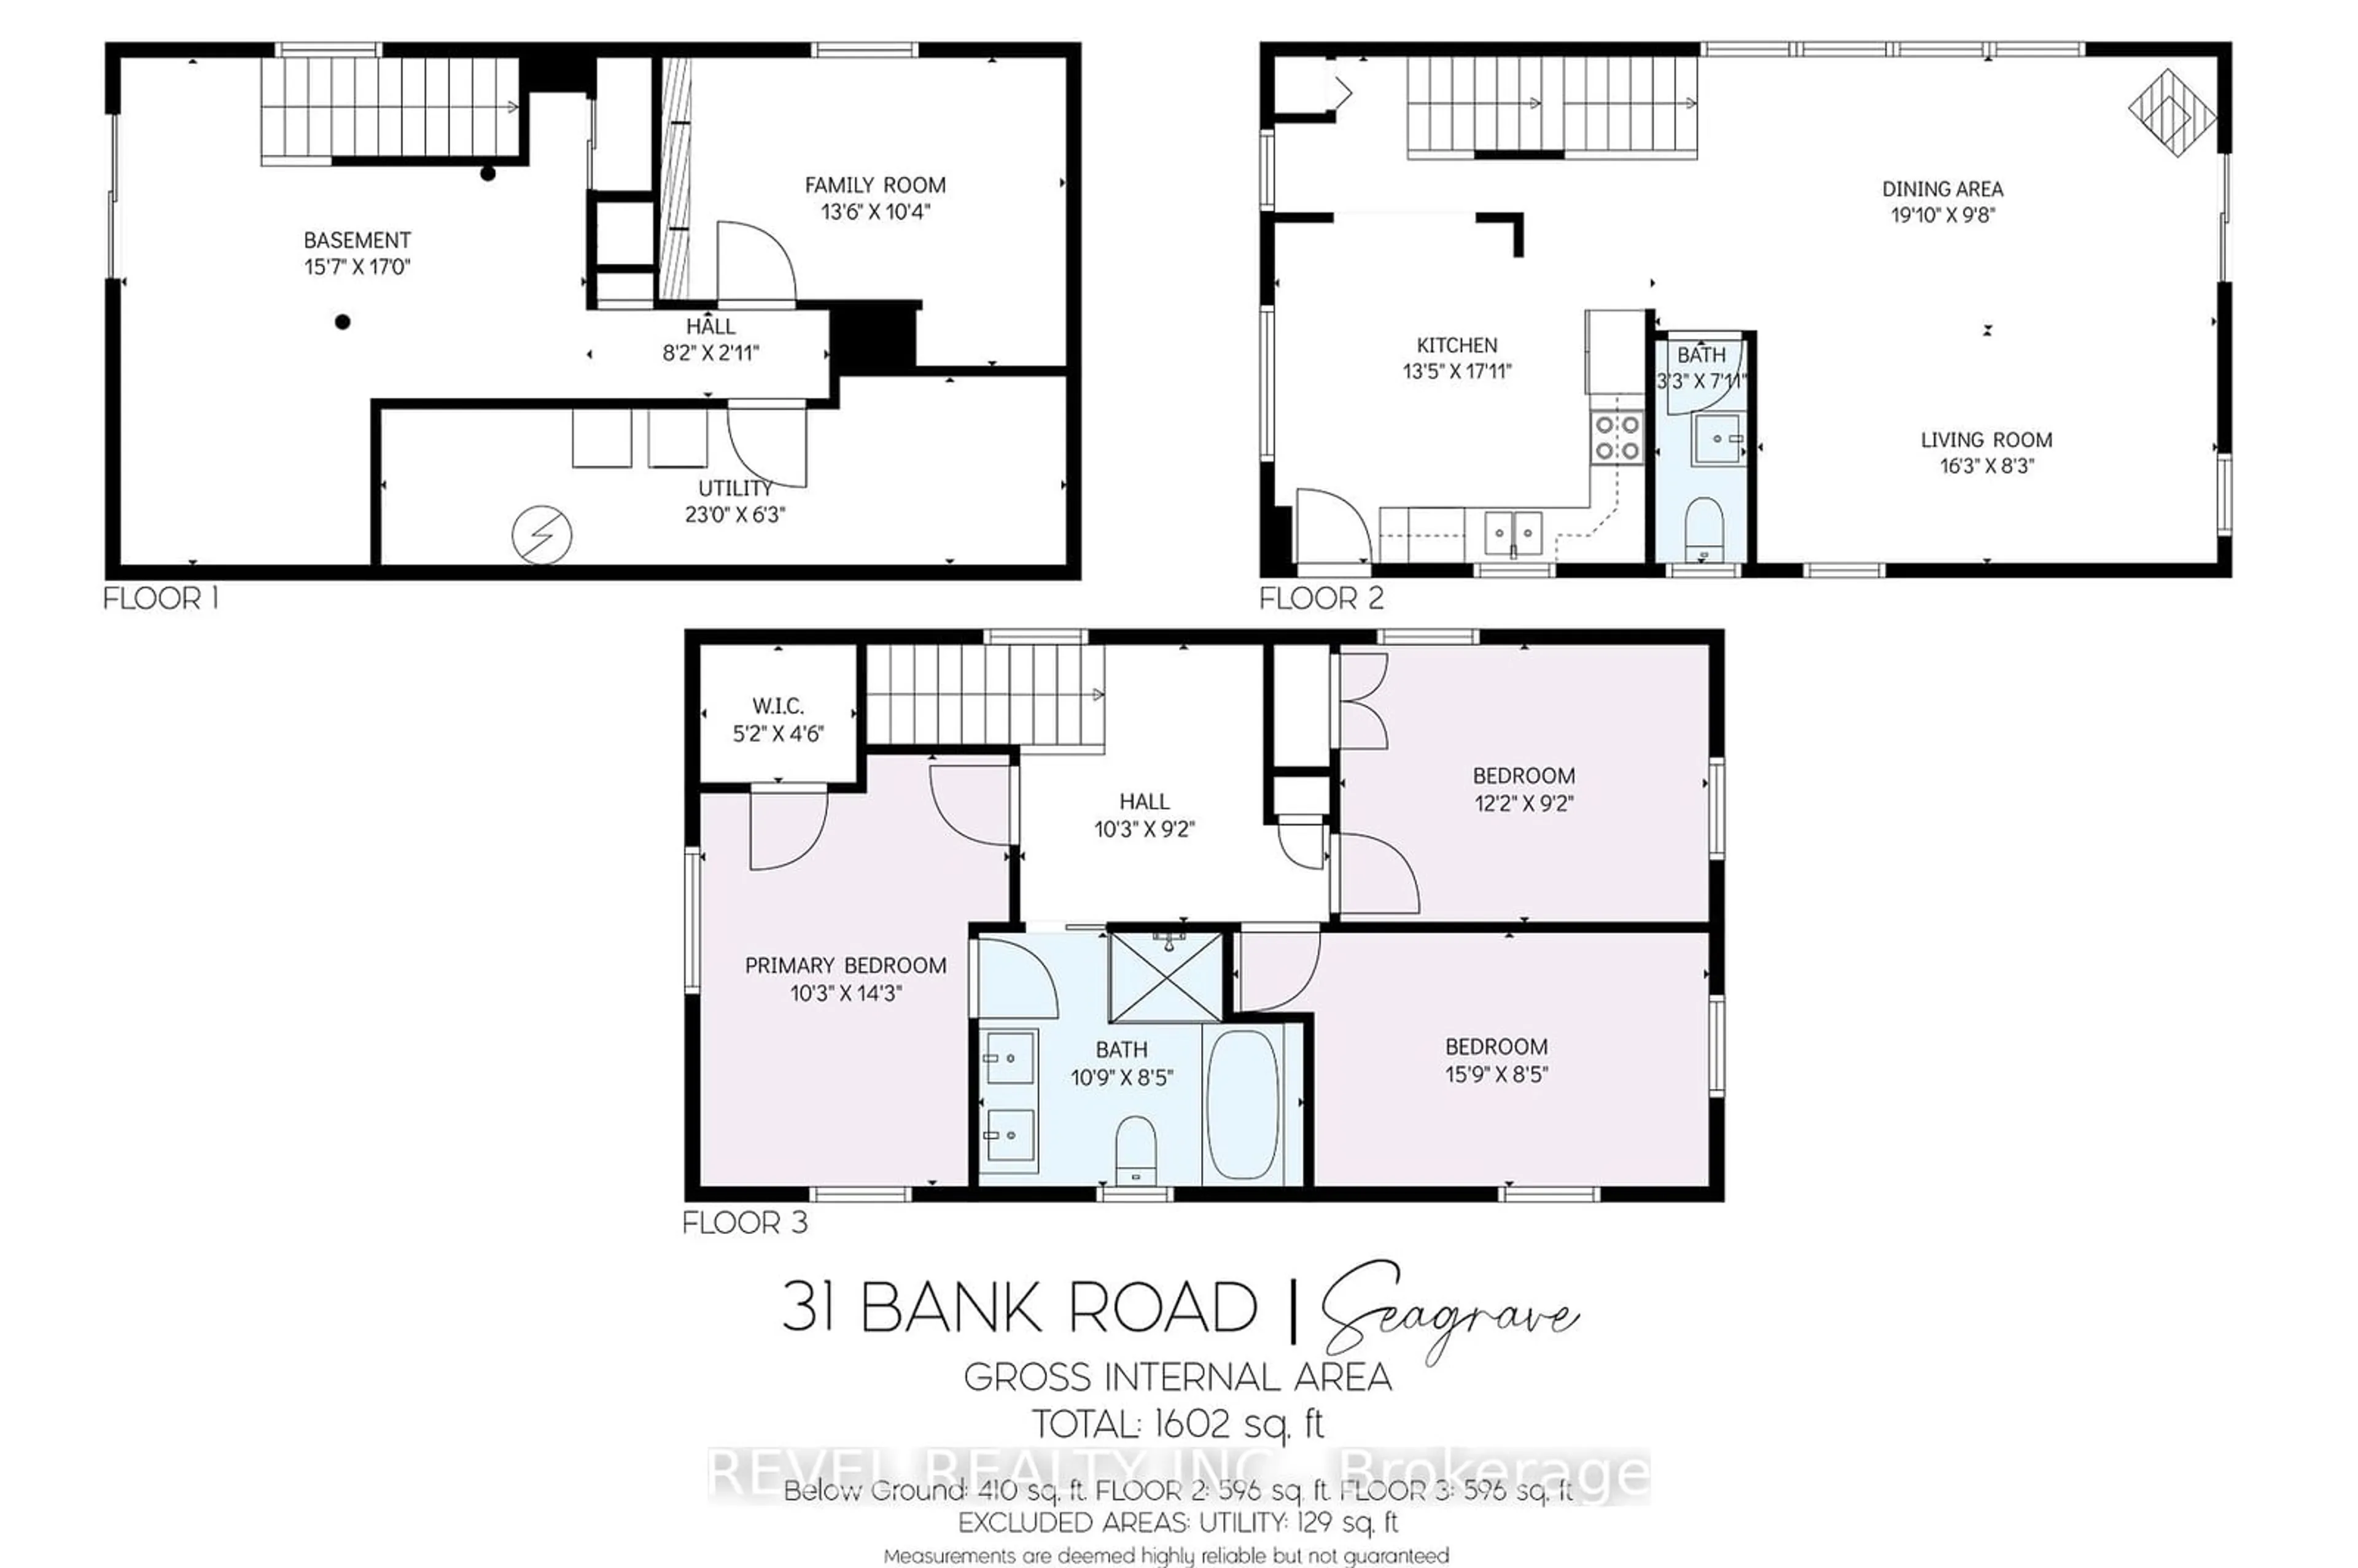 Floor plan for 31 Bank Rd, Scugog Ontario L0C 1G0